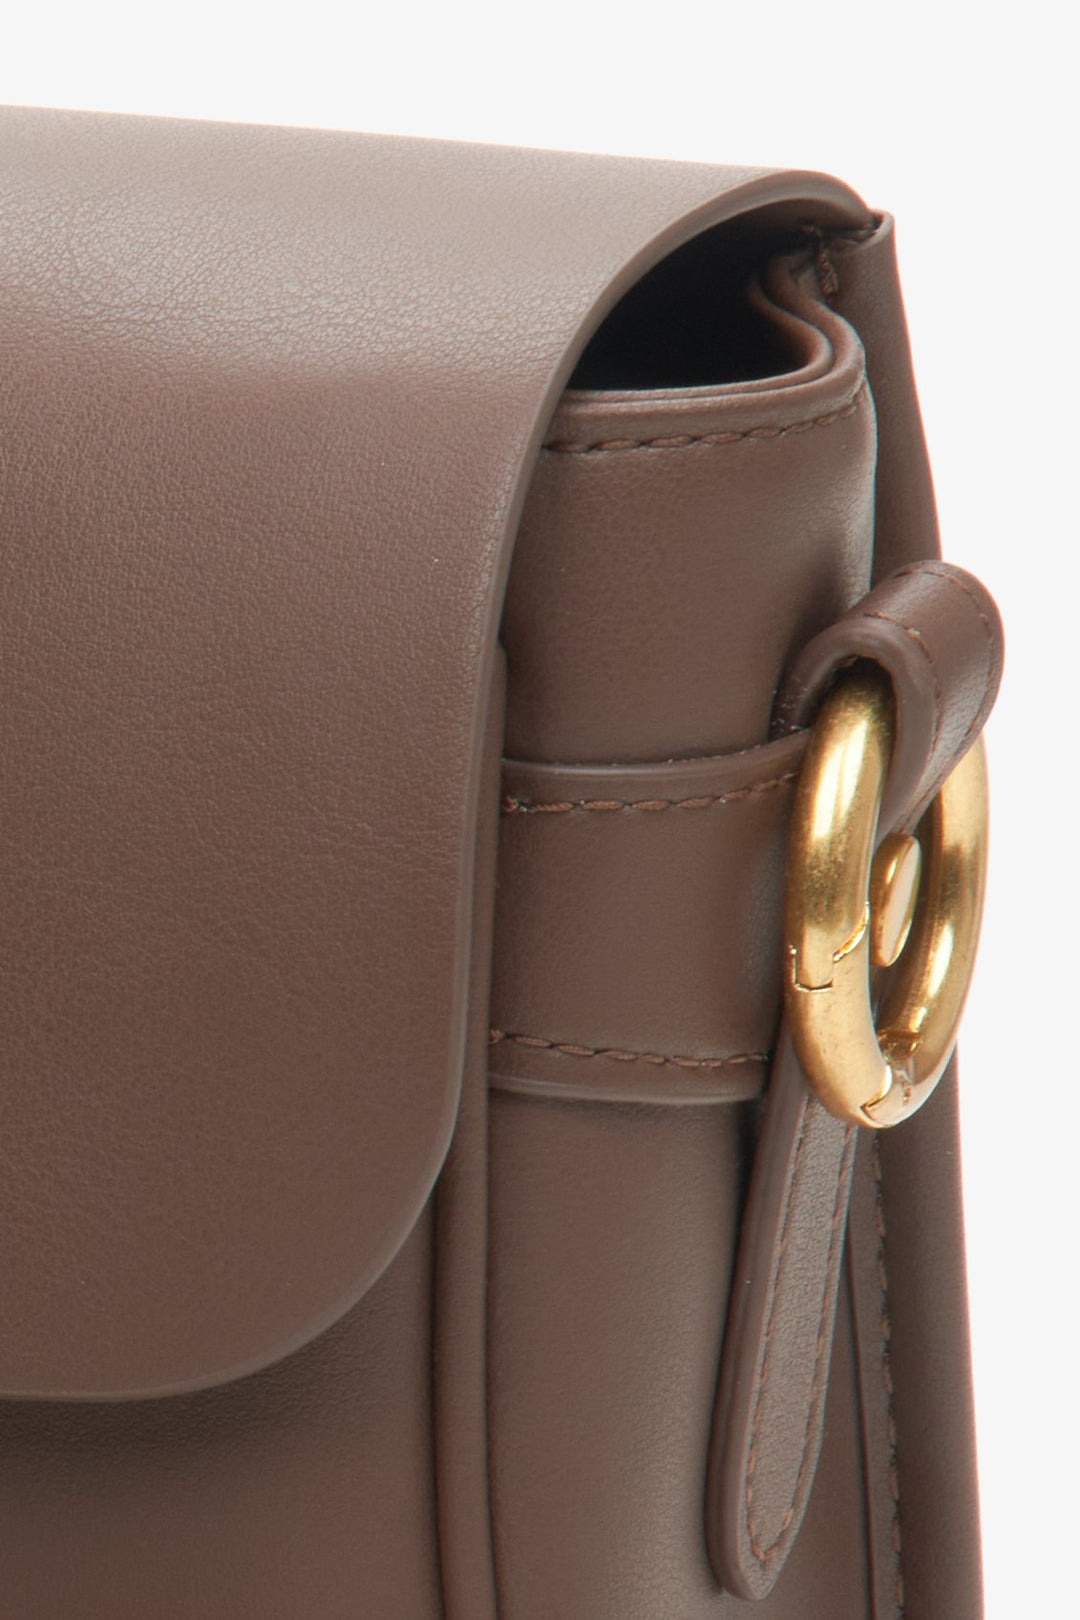 Women's dark brown leather handbag by Estro - close up on details.